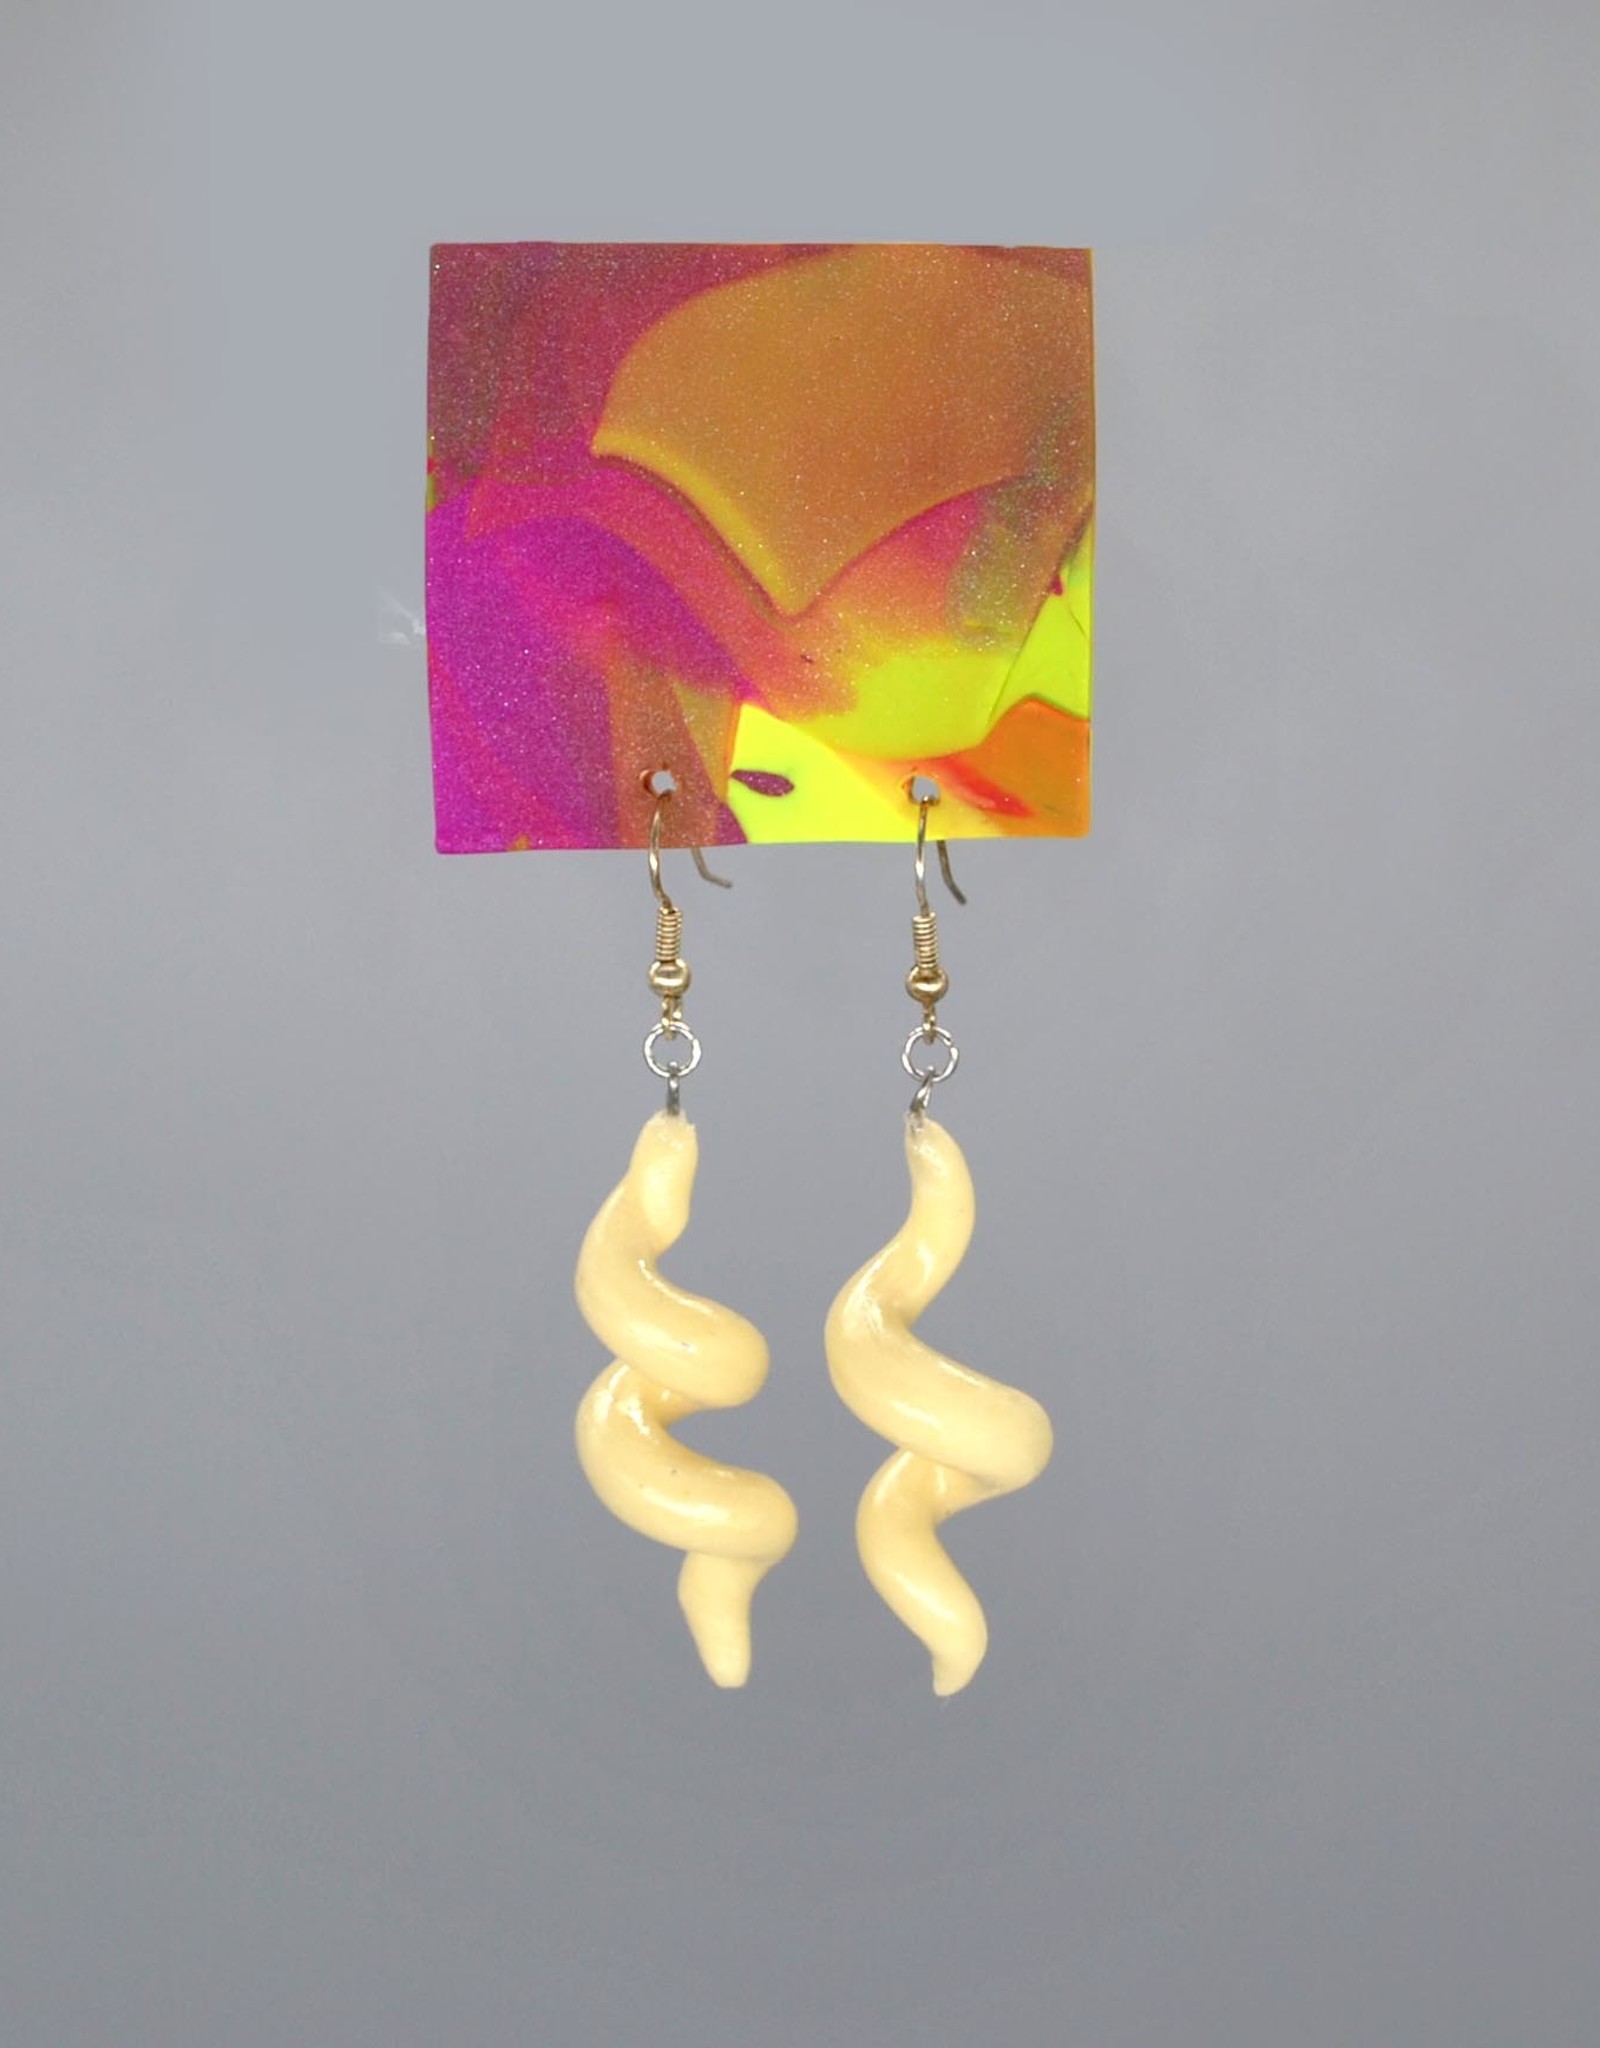 Glow in the Dark “Spiral” Pair of Earrings by GERM Jewelry